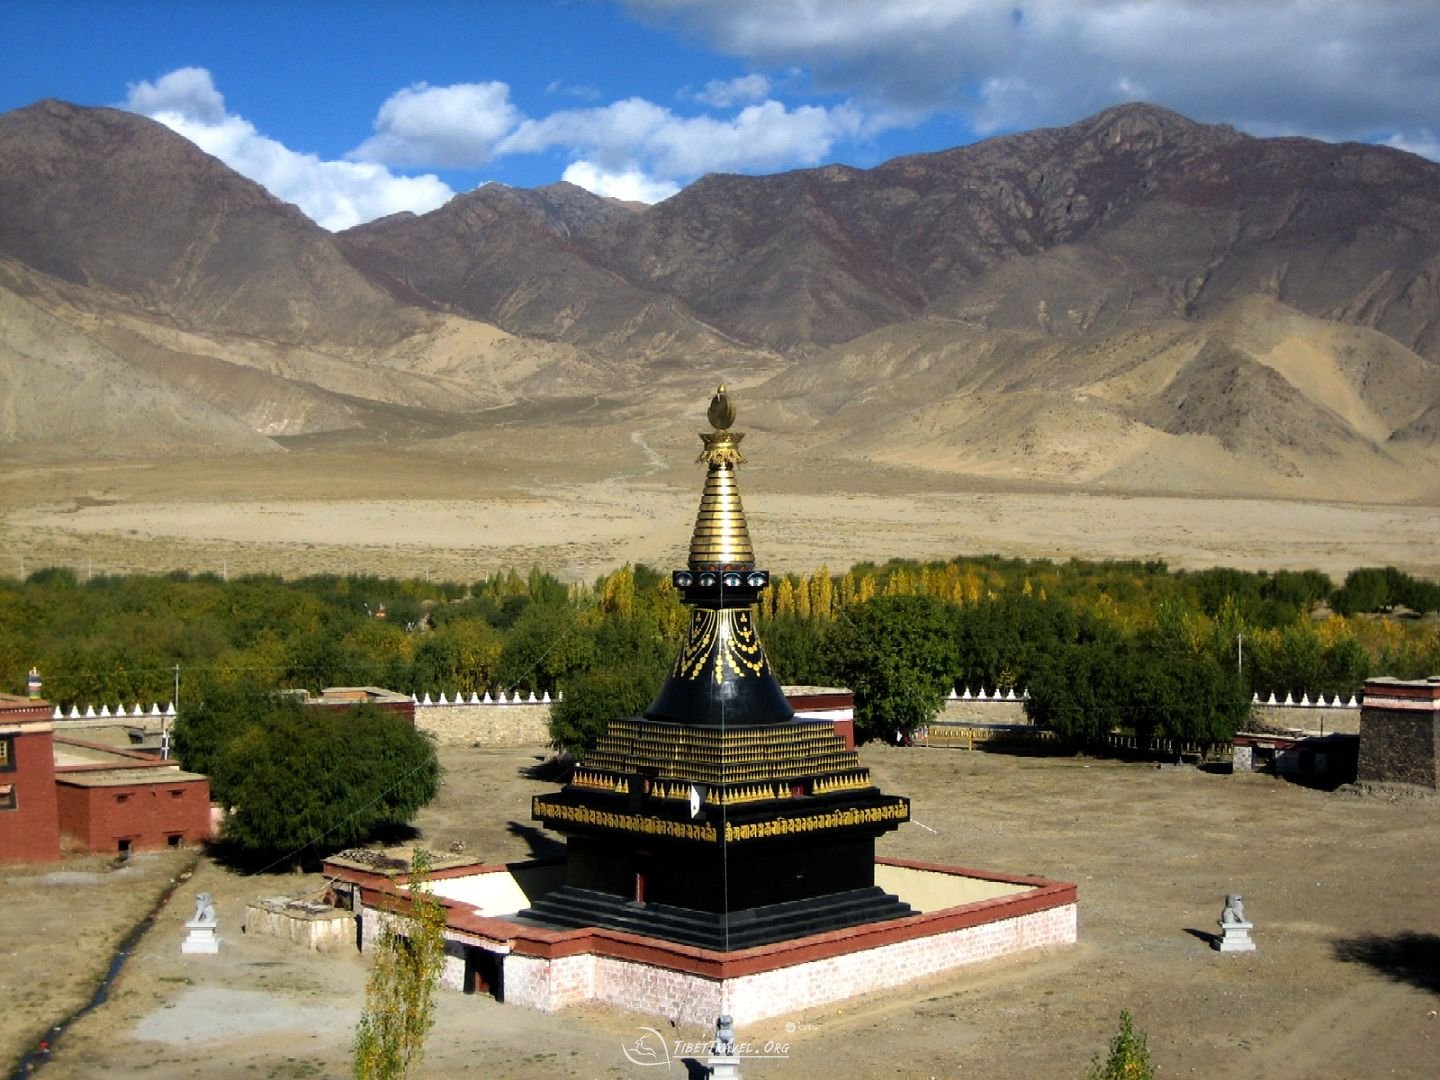 Sakya Monastery in Tibet